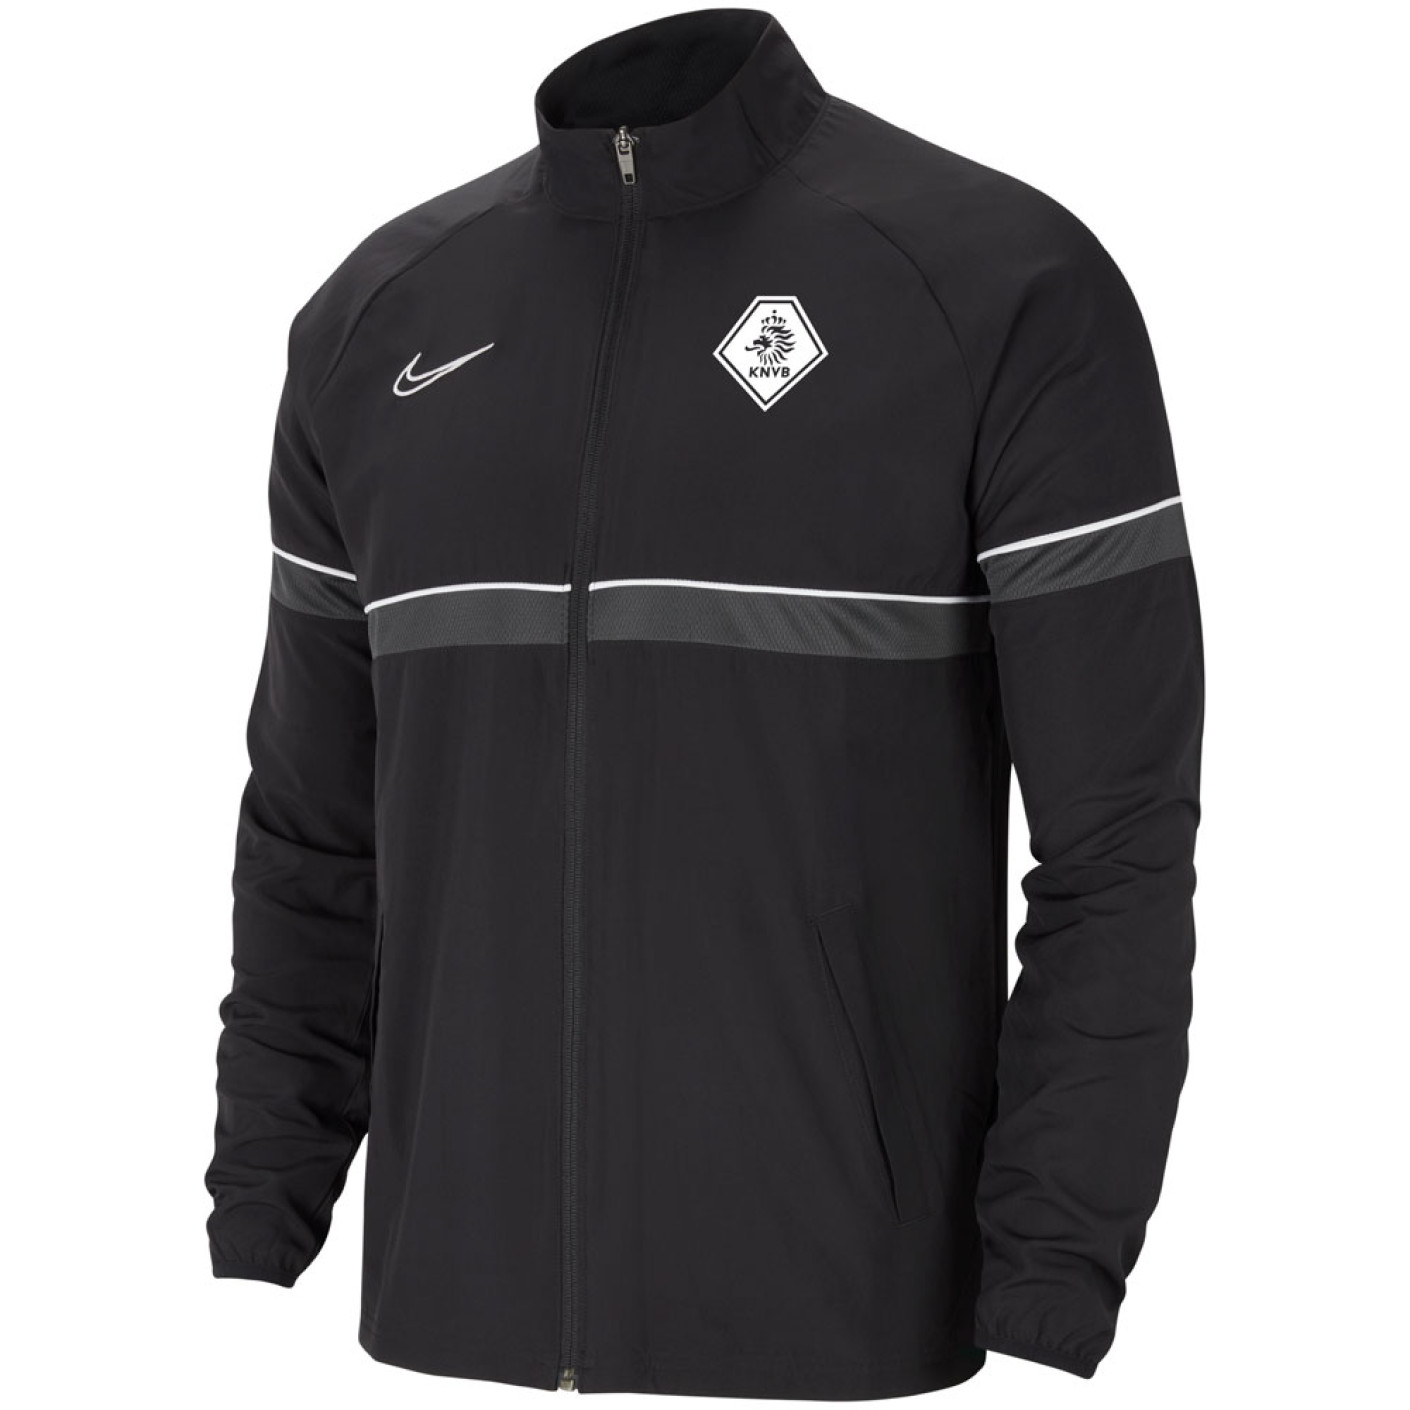 Nike KNVB Woven Training Jacket Black